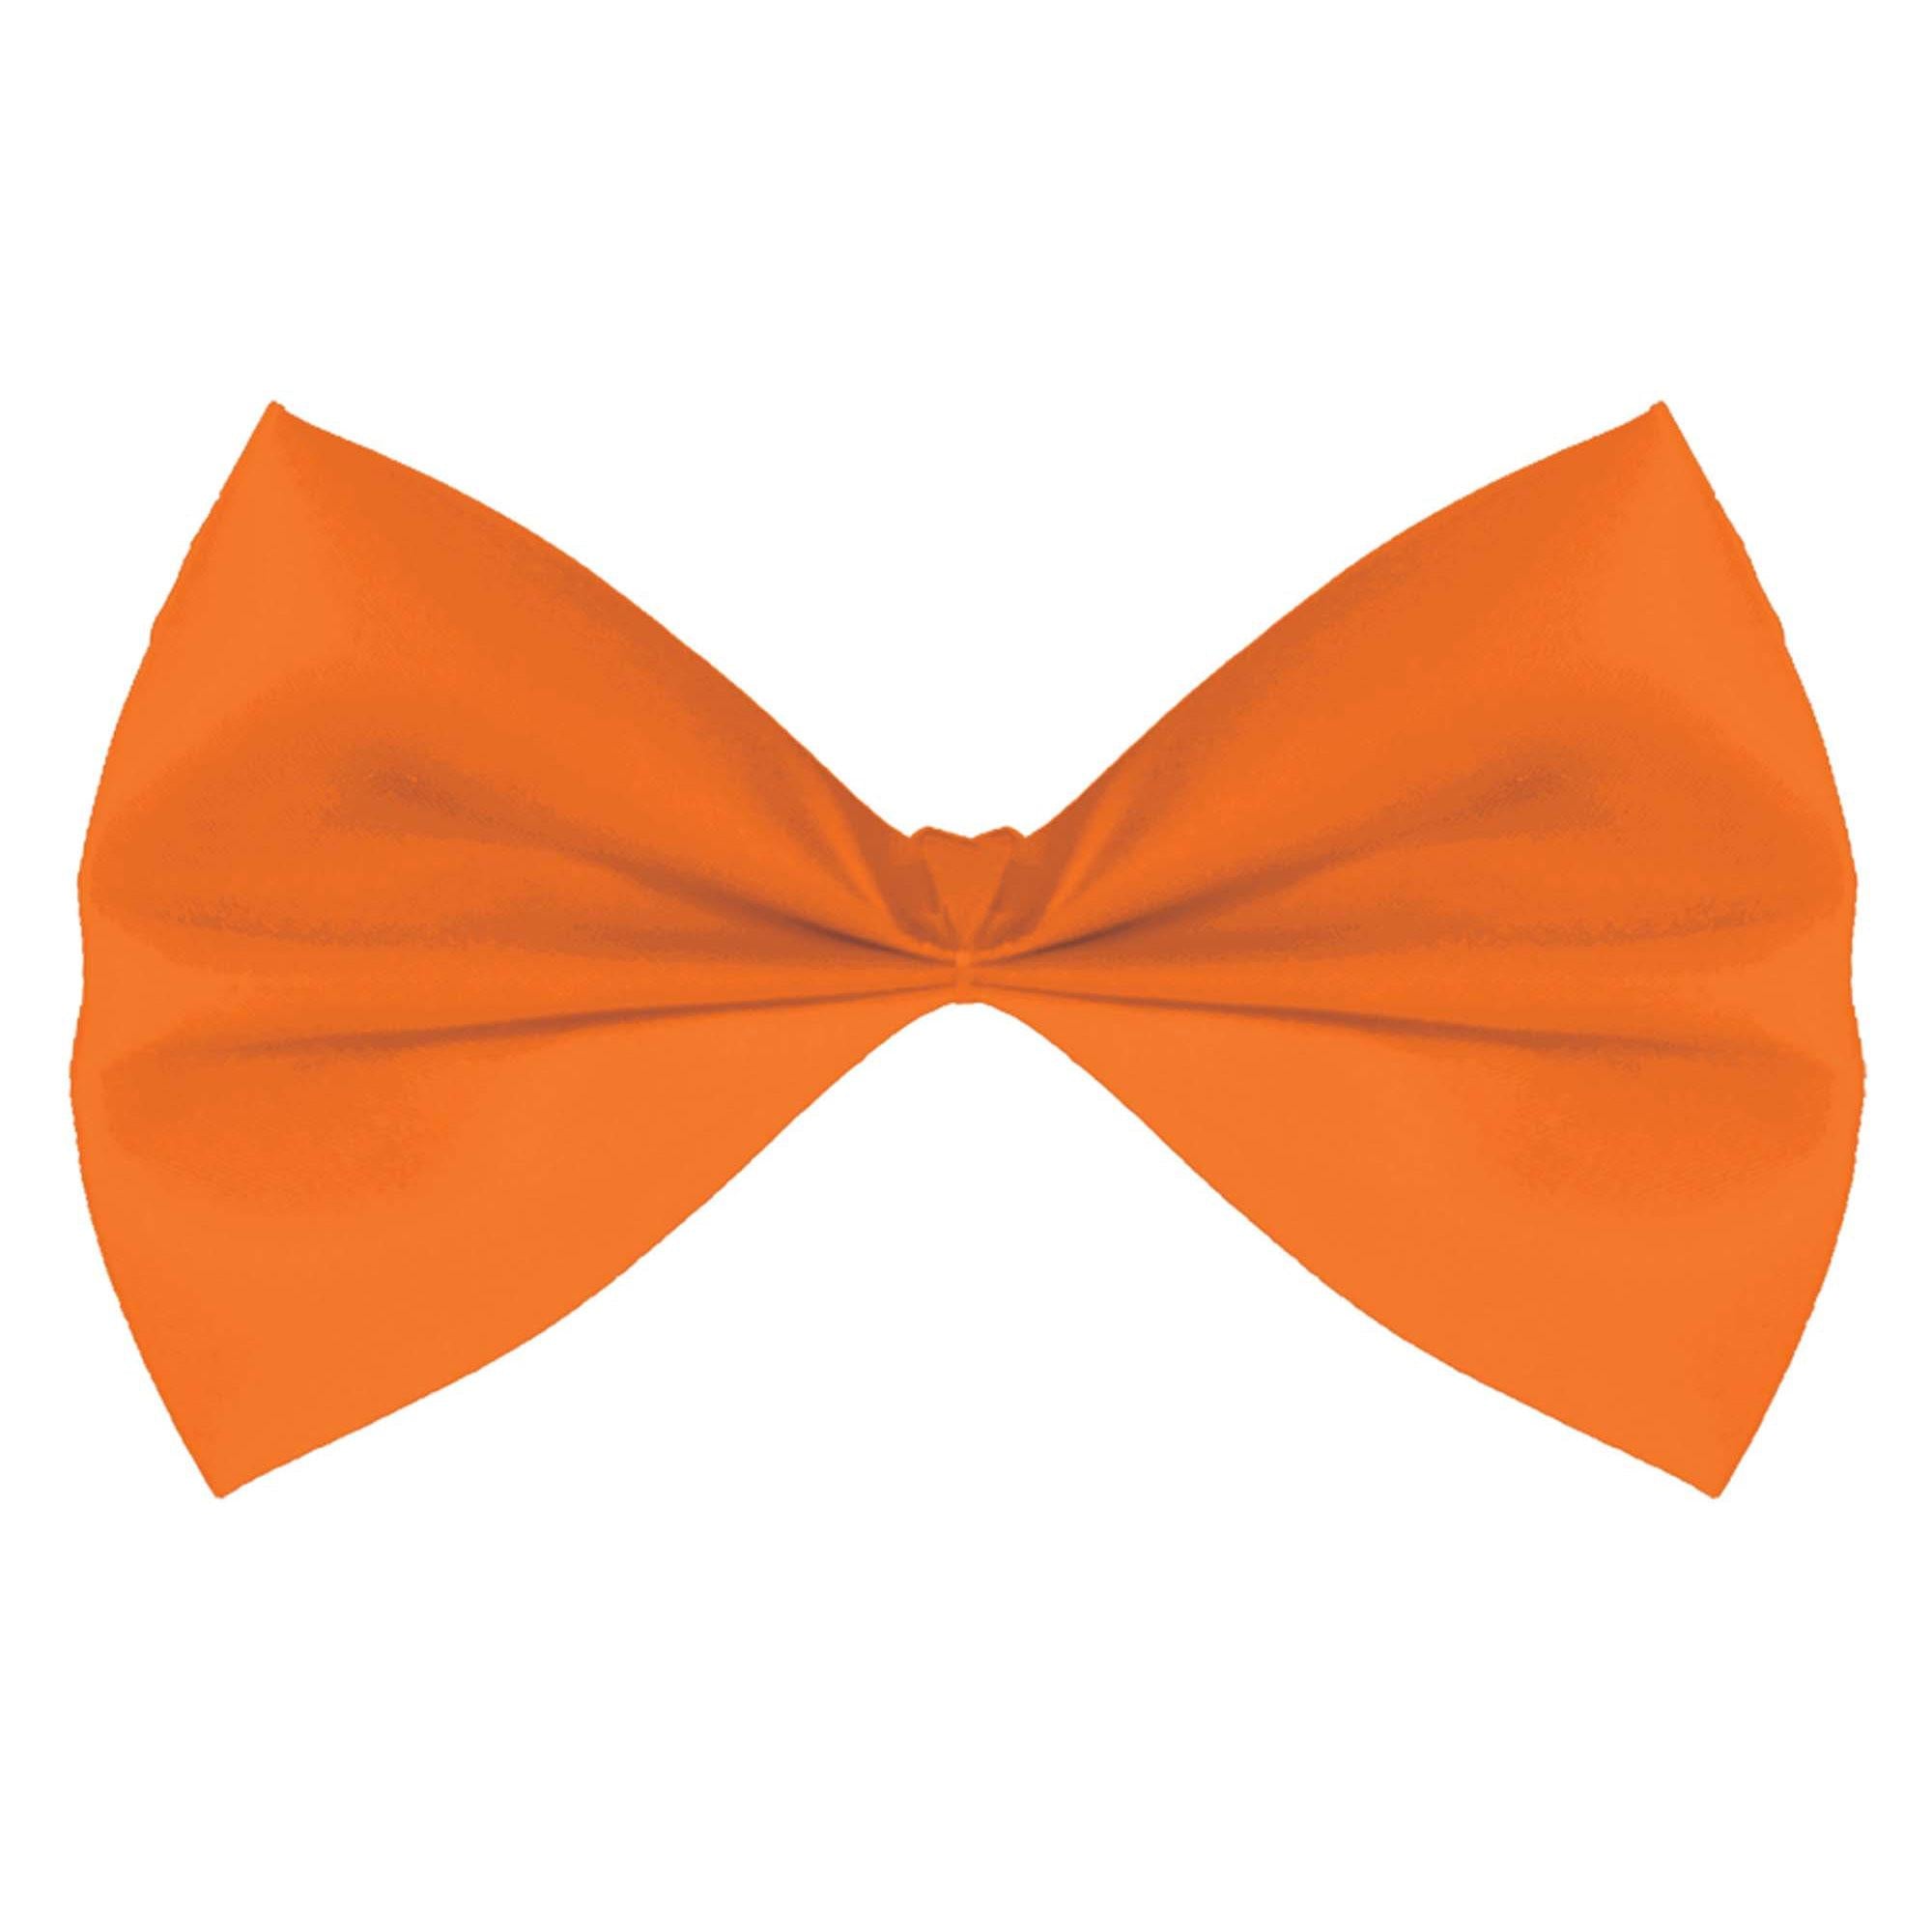 Bow Tie Orange Costumes & Apparel - Party Centre